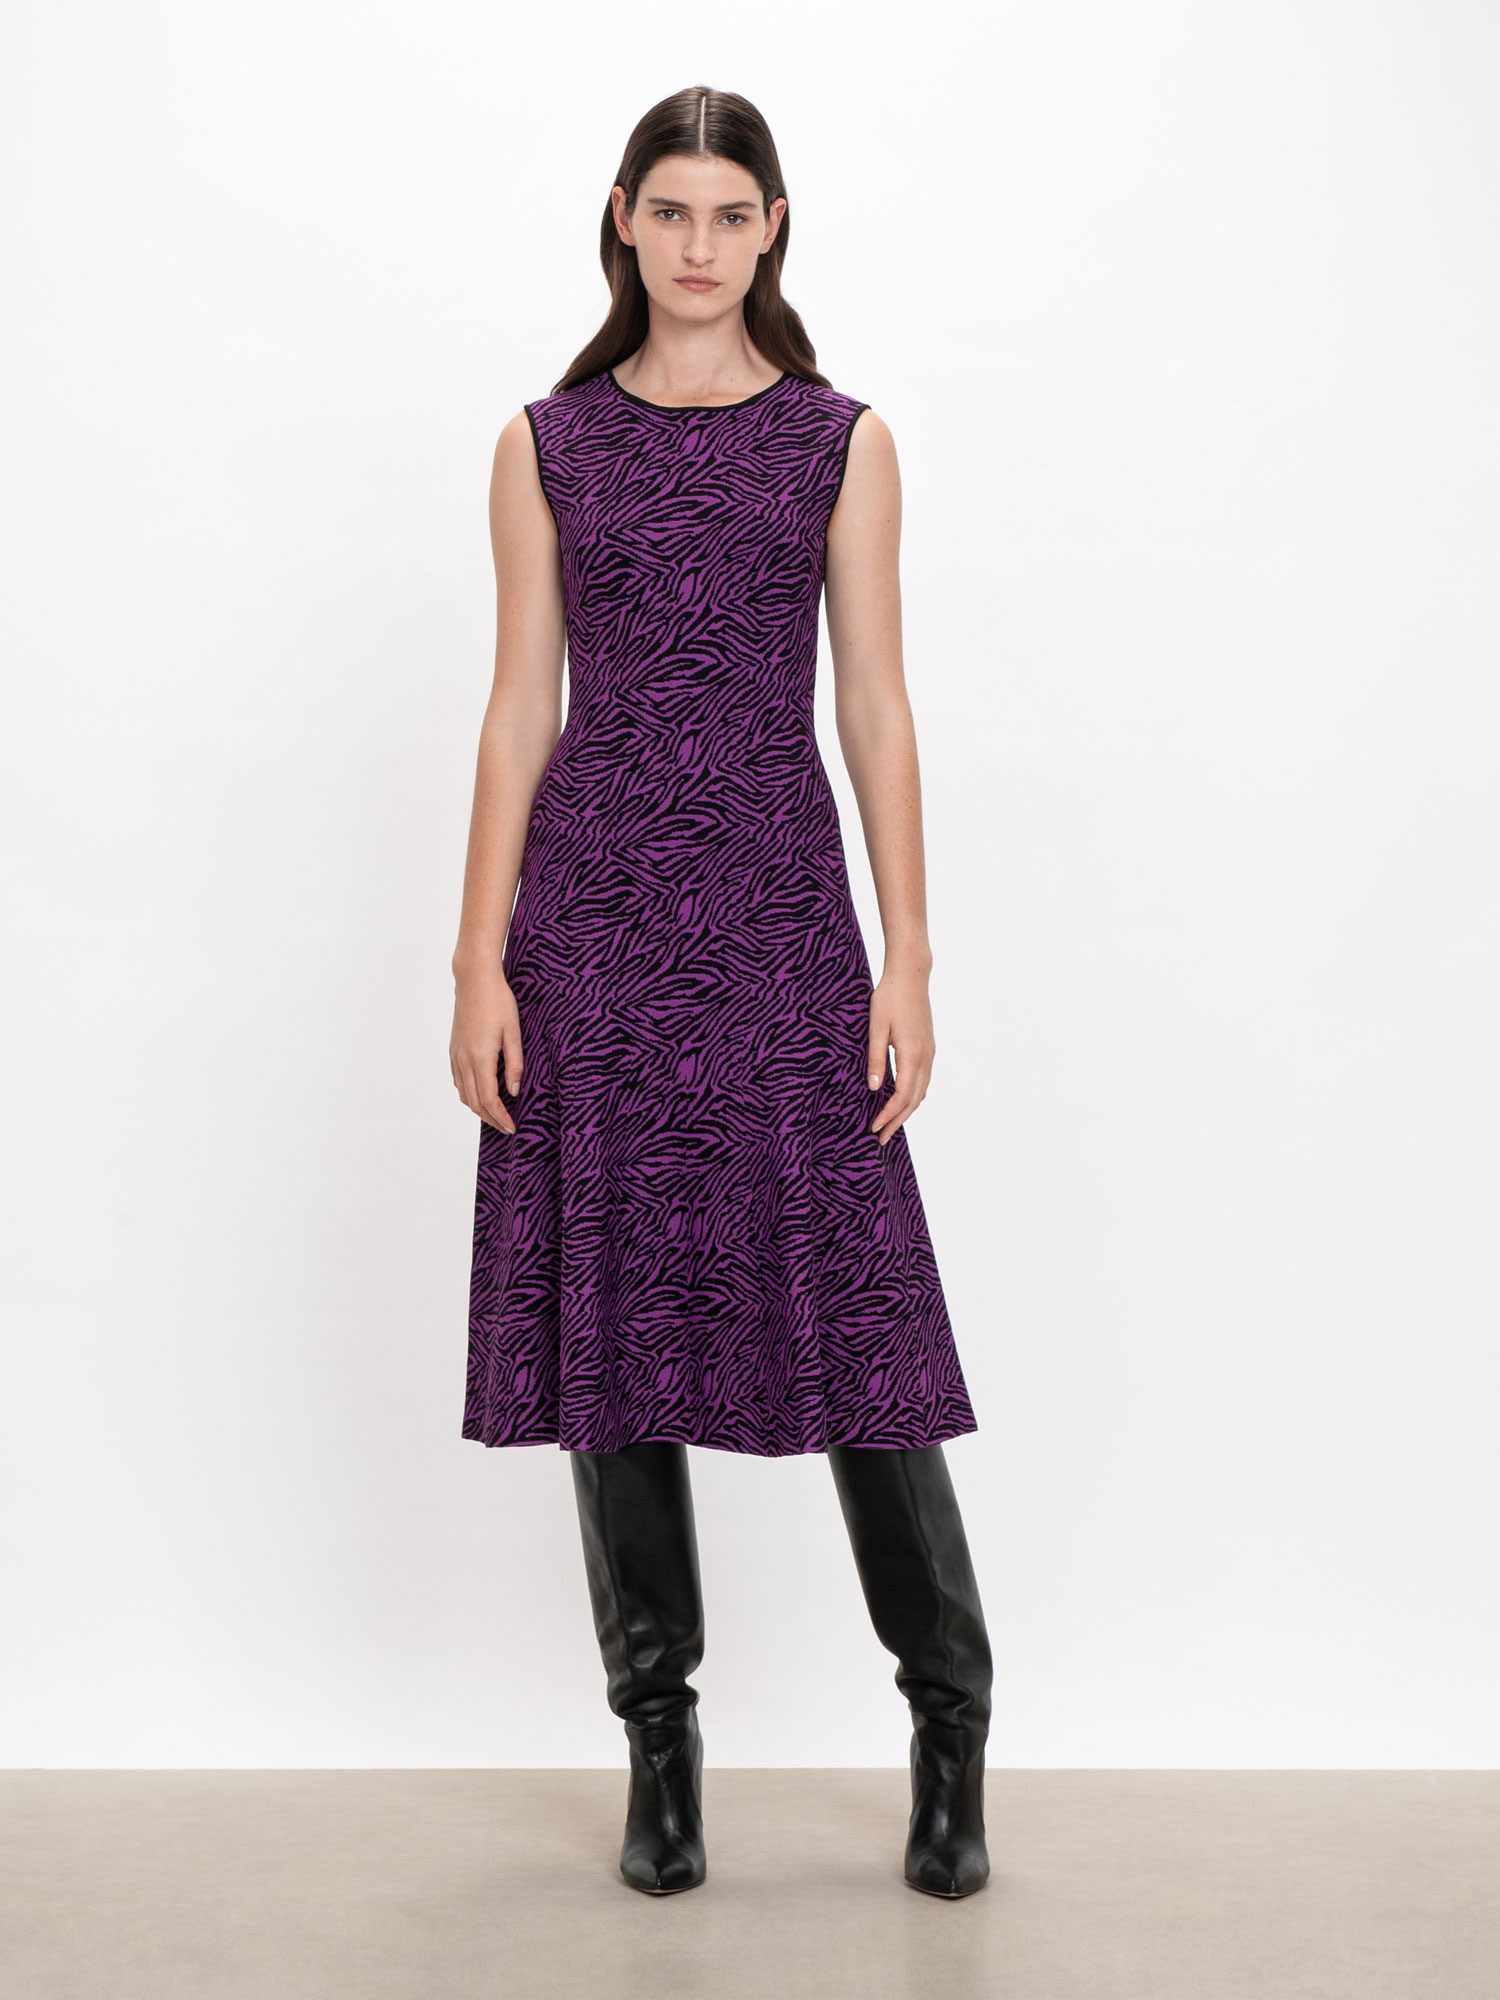 Zebra Jacquard Knit Dress | Buy Knitwear Online - Veronika Maine